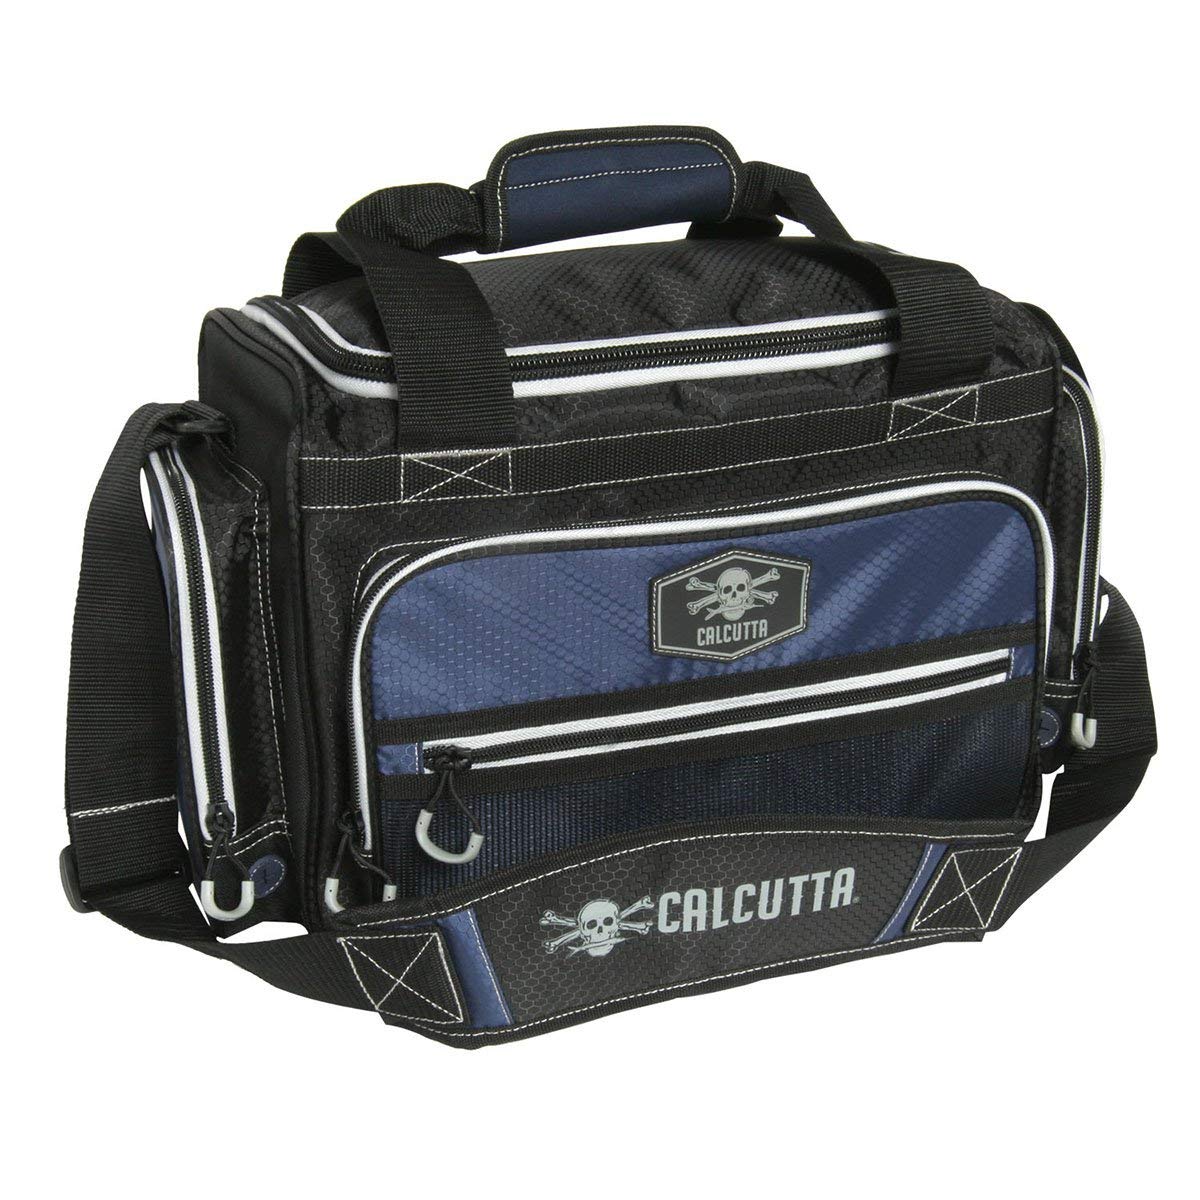 Calcutta 3700 Explorer Tackle Bag w/ 4 Trays